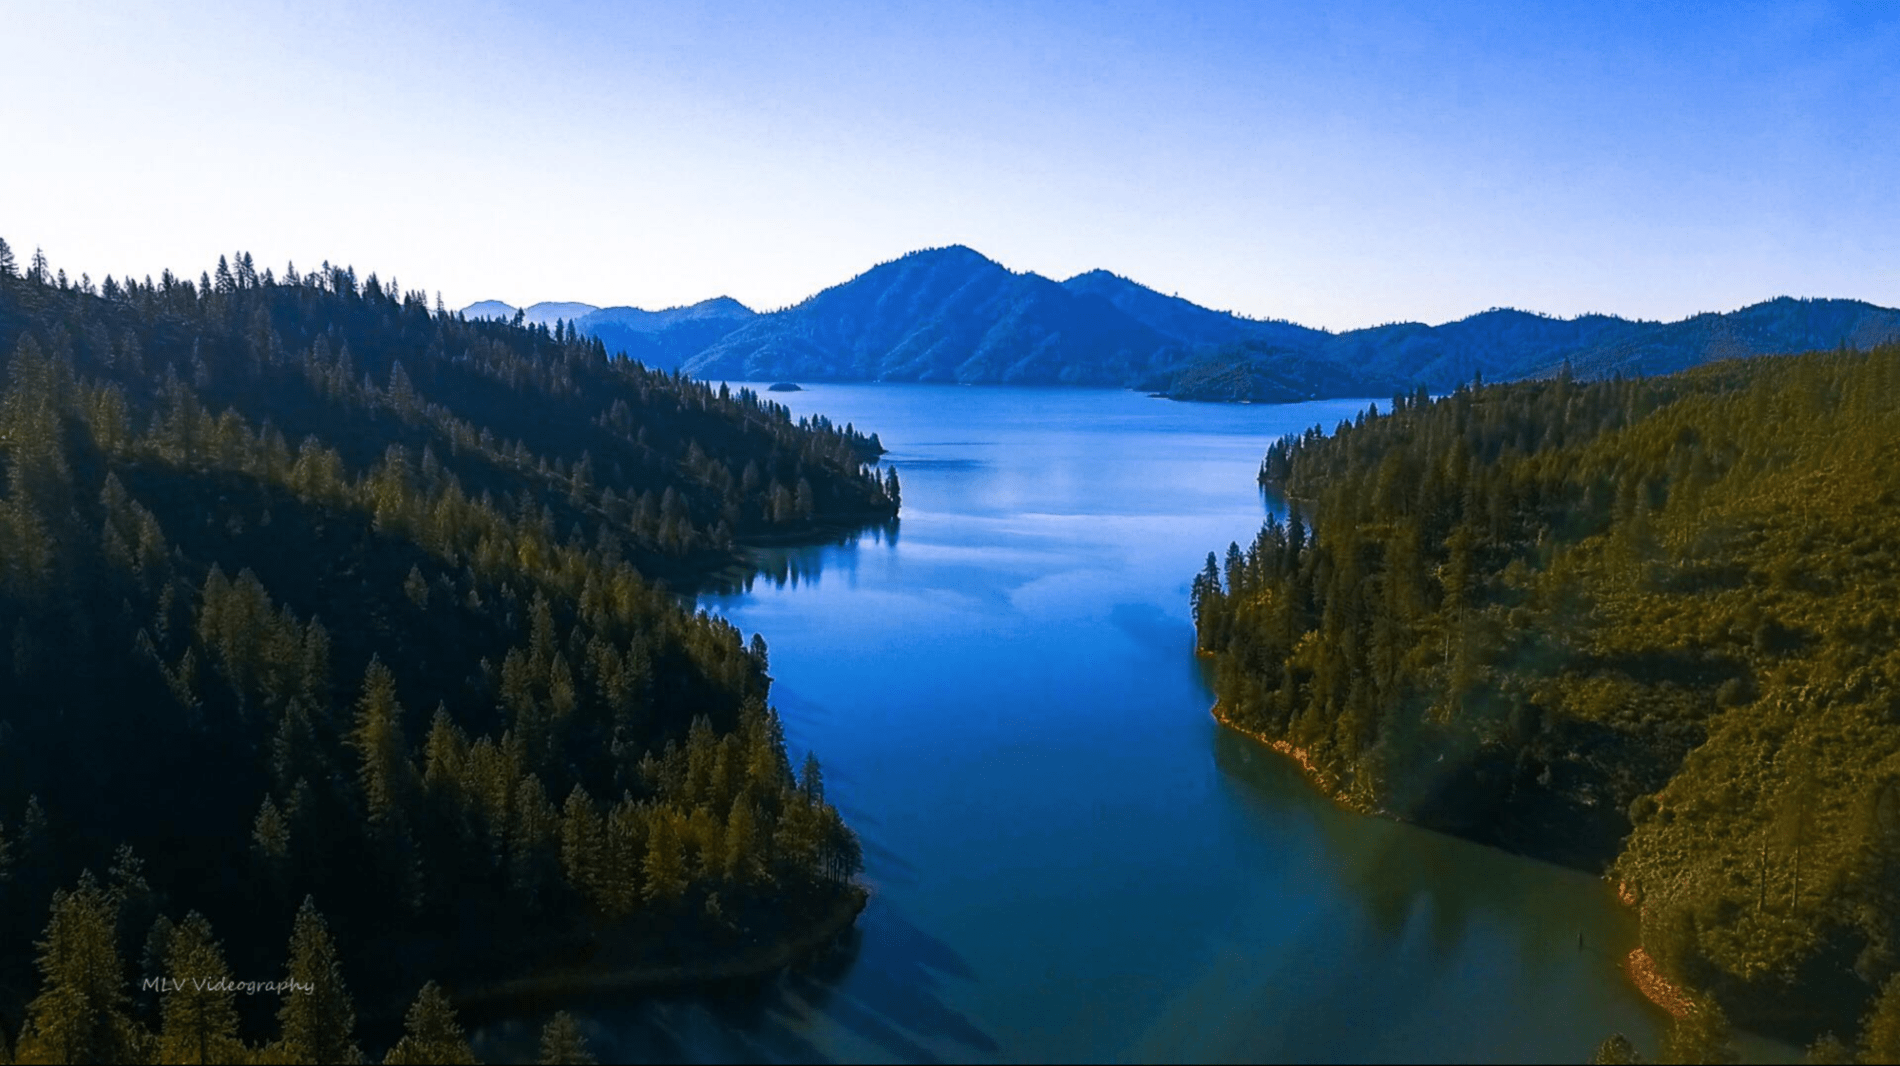 Beautiful drone shot of Shasta Lake and its precious mountain scenery